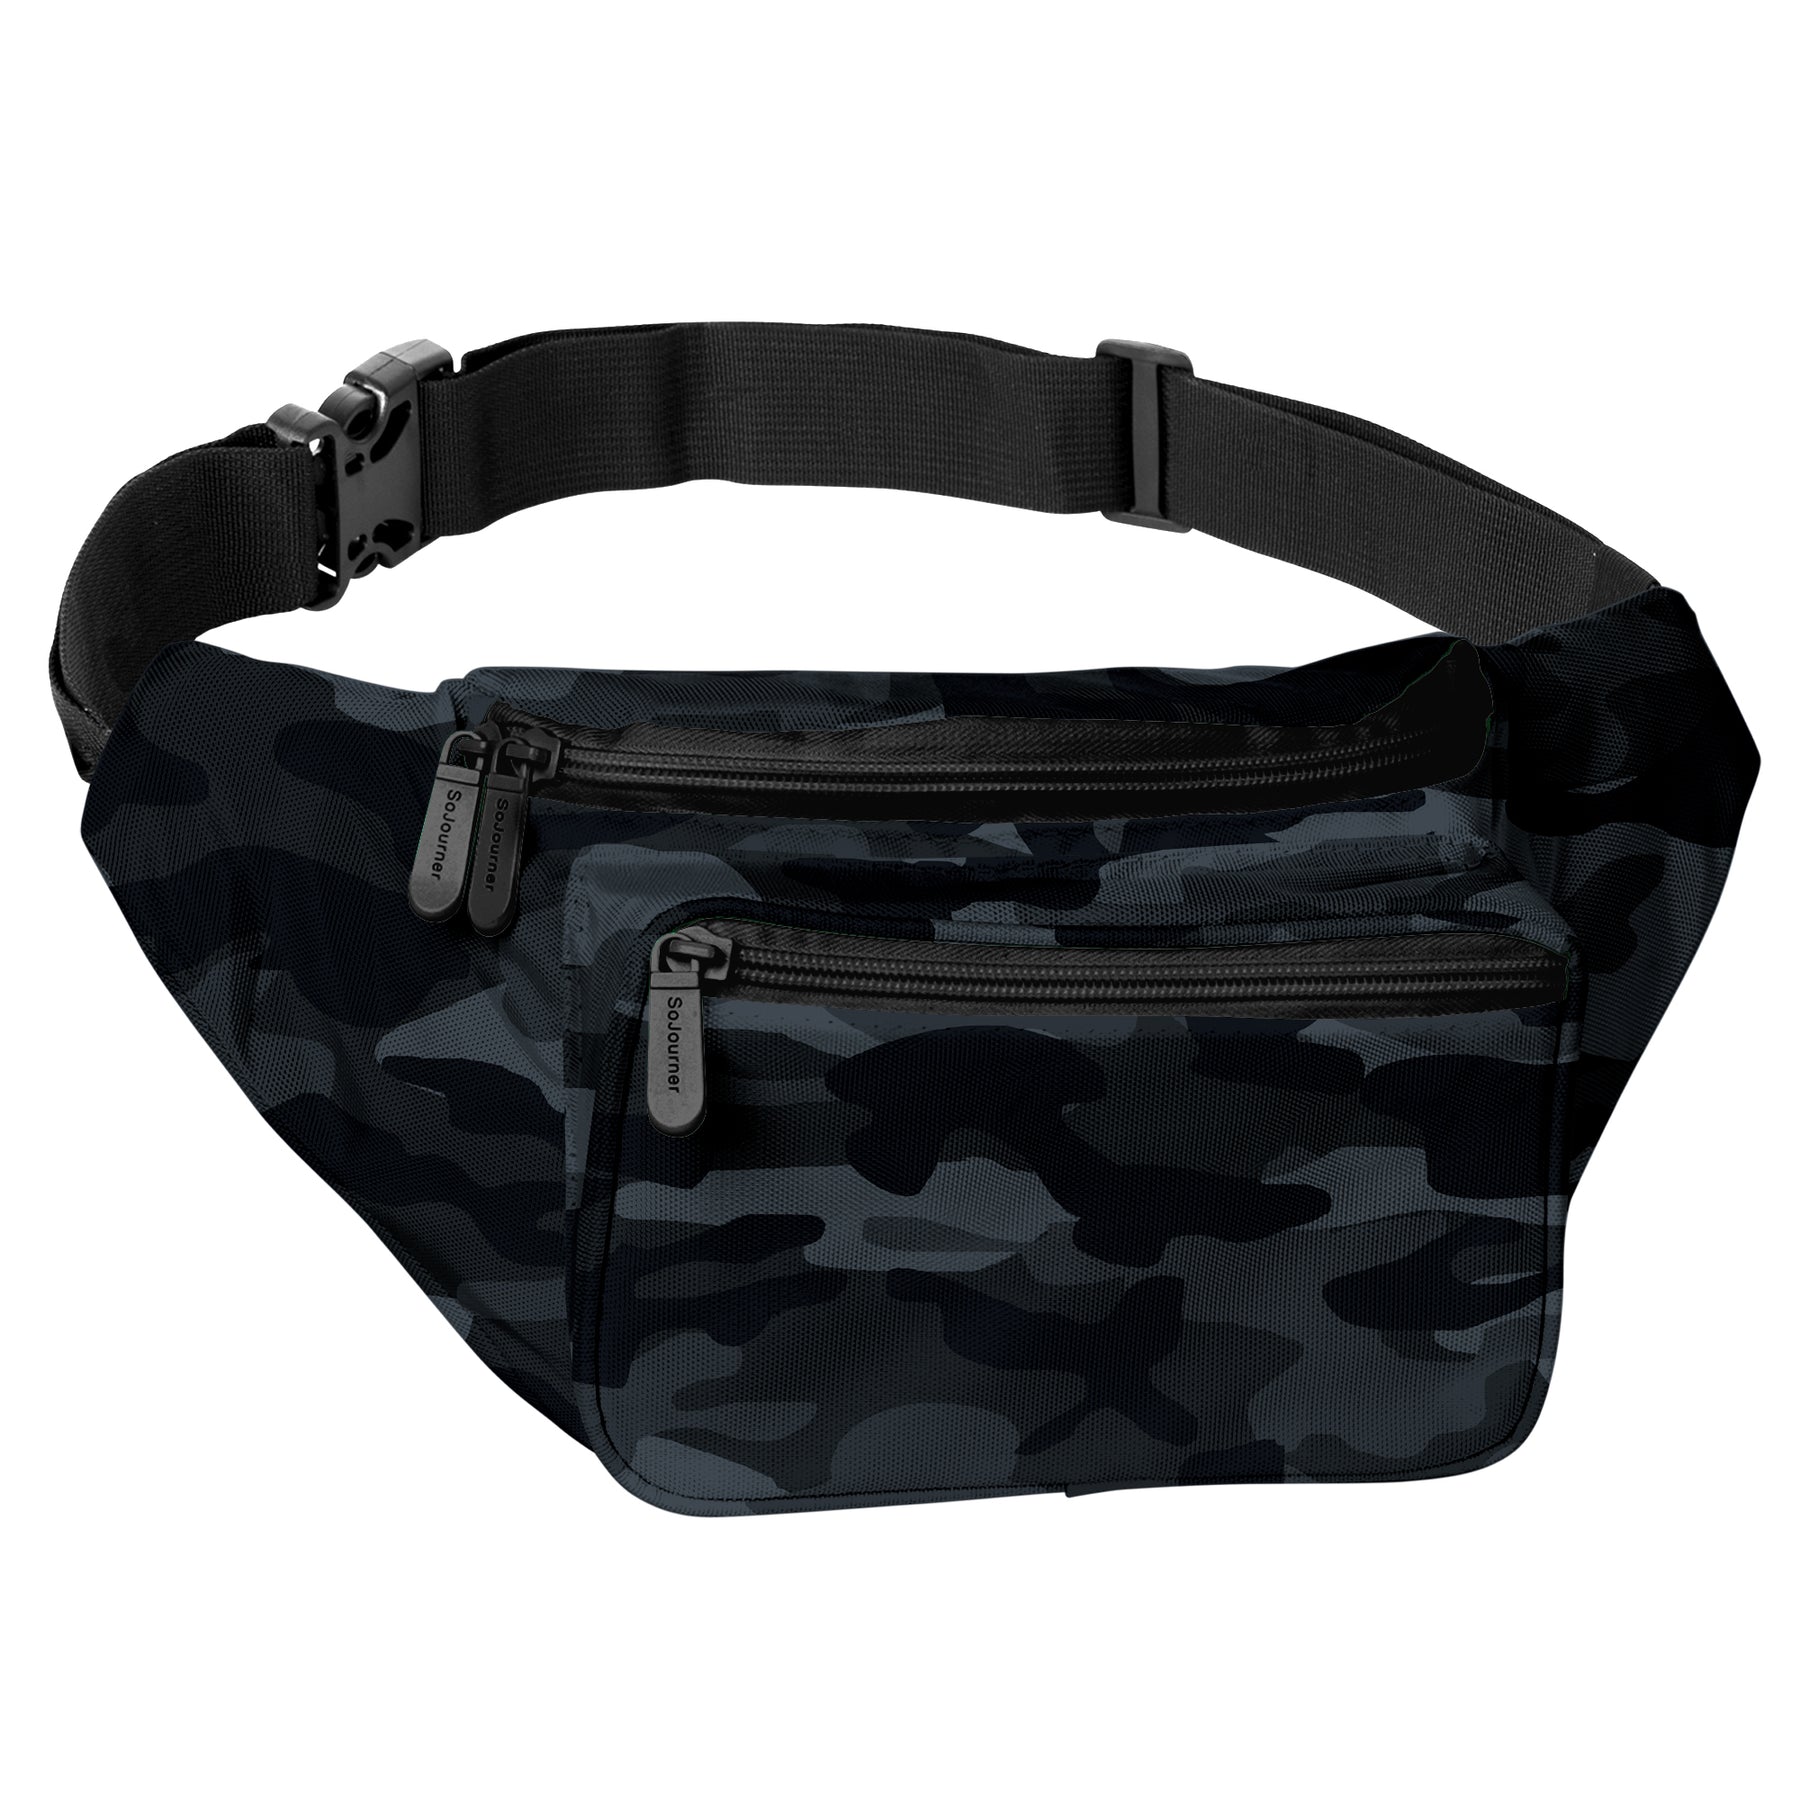 Fanny Pack Black for Men Belt Bag Bum Bag Crossbody Bag 